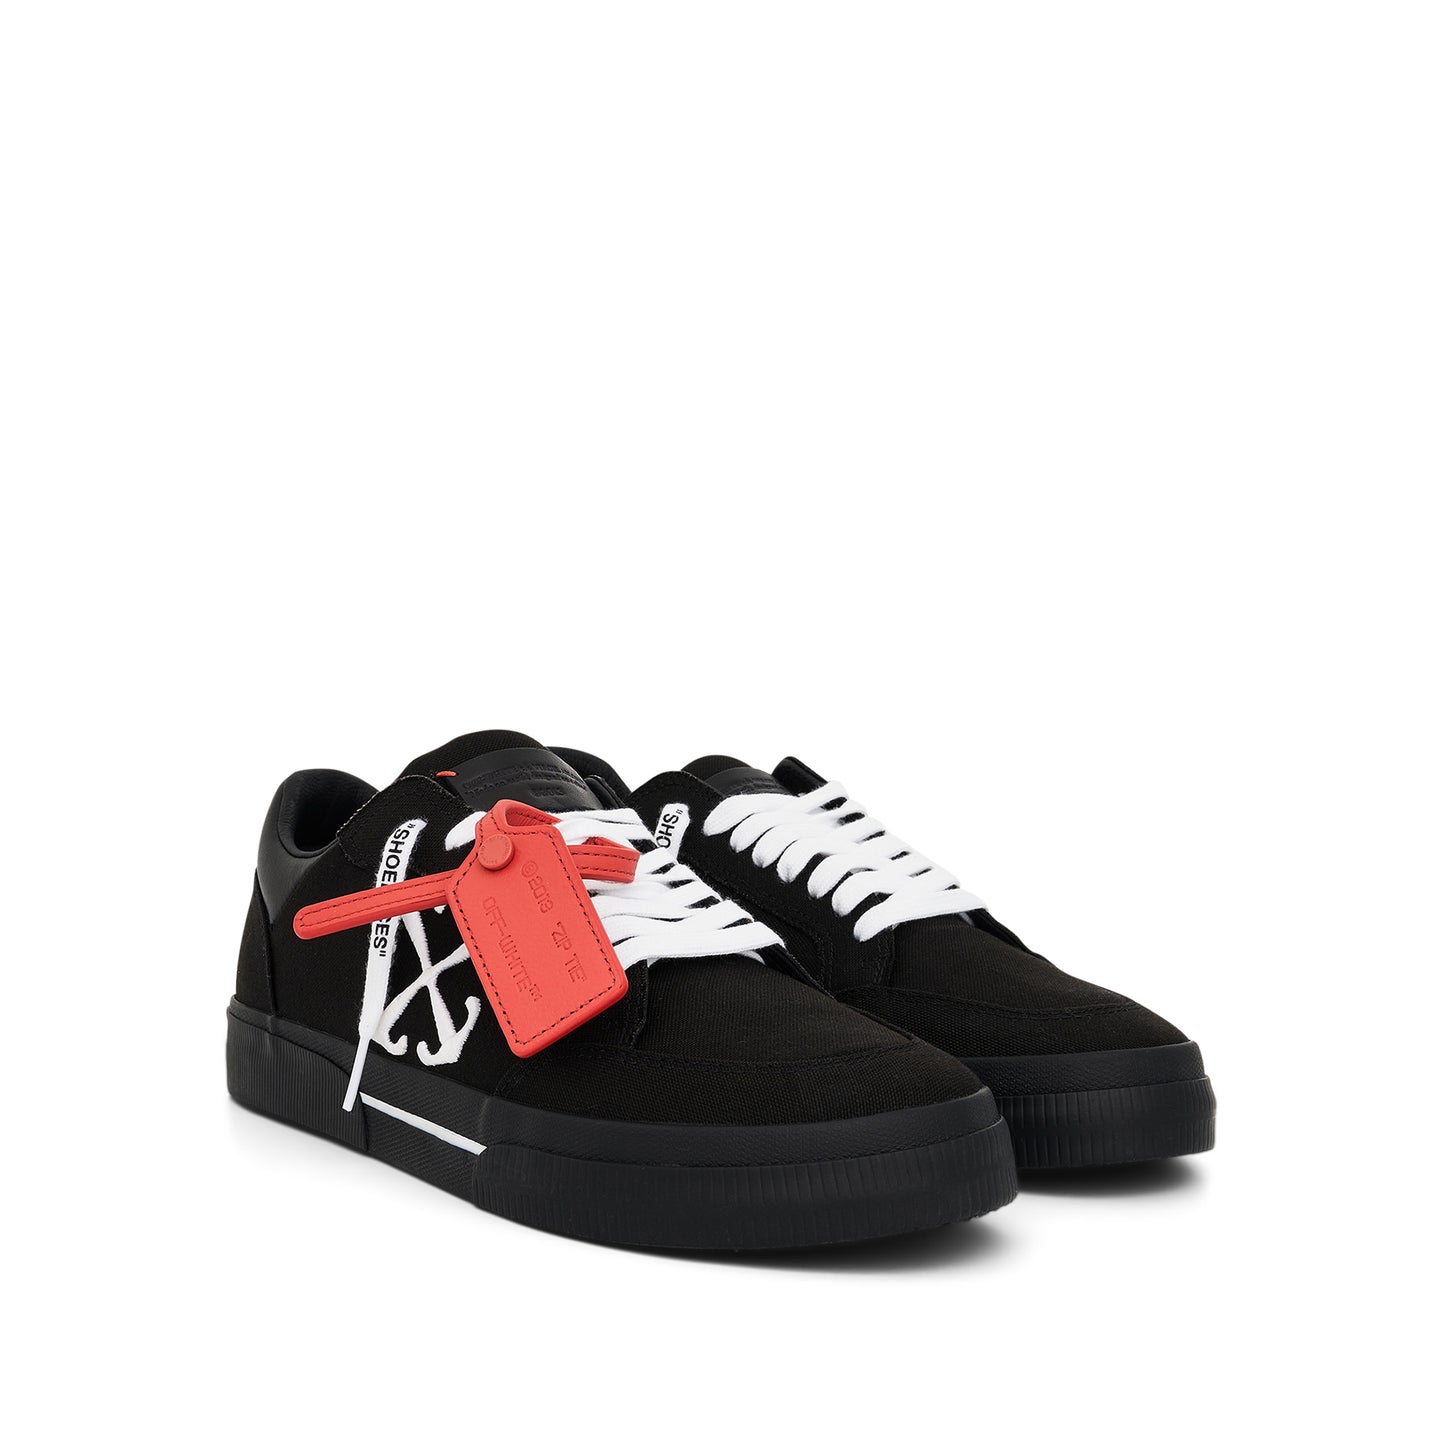 New Low Vulcanized Canvas Sneaker in Black/White